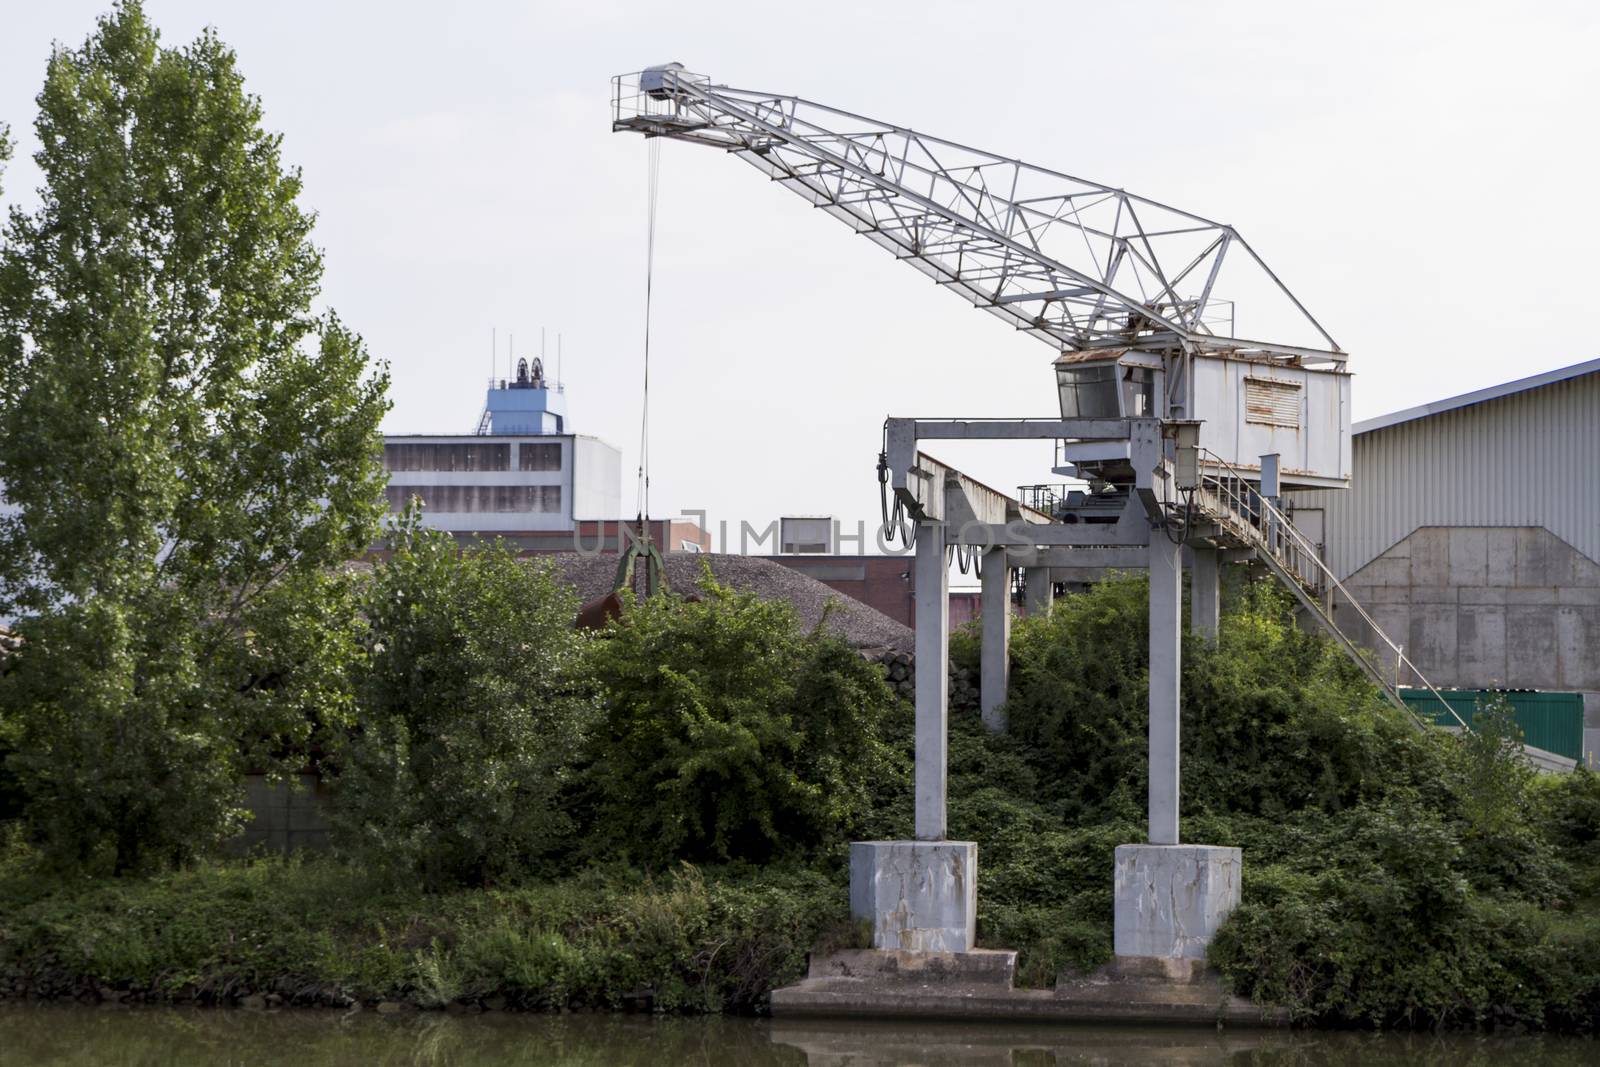 small, old dockside crane at river Neckar in germany